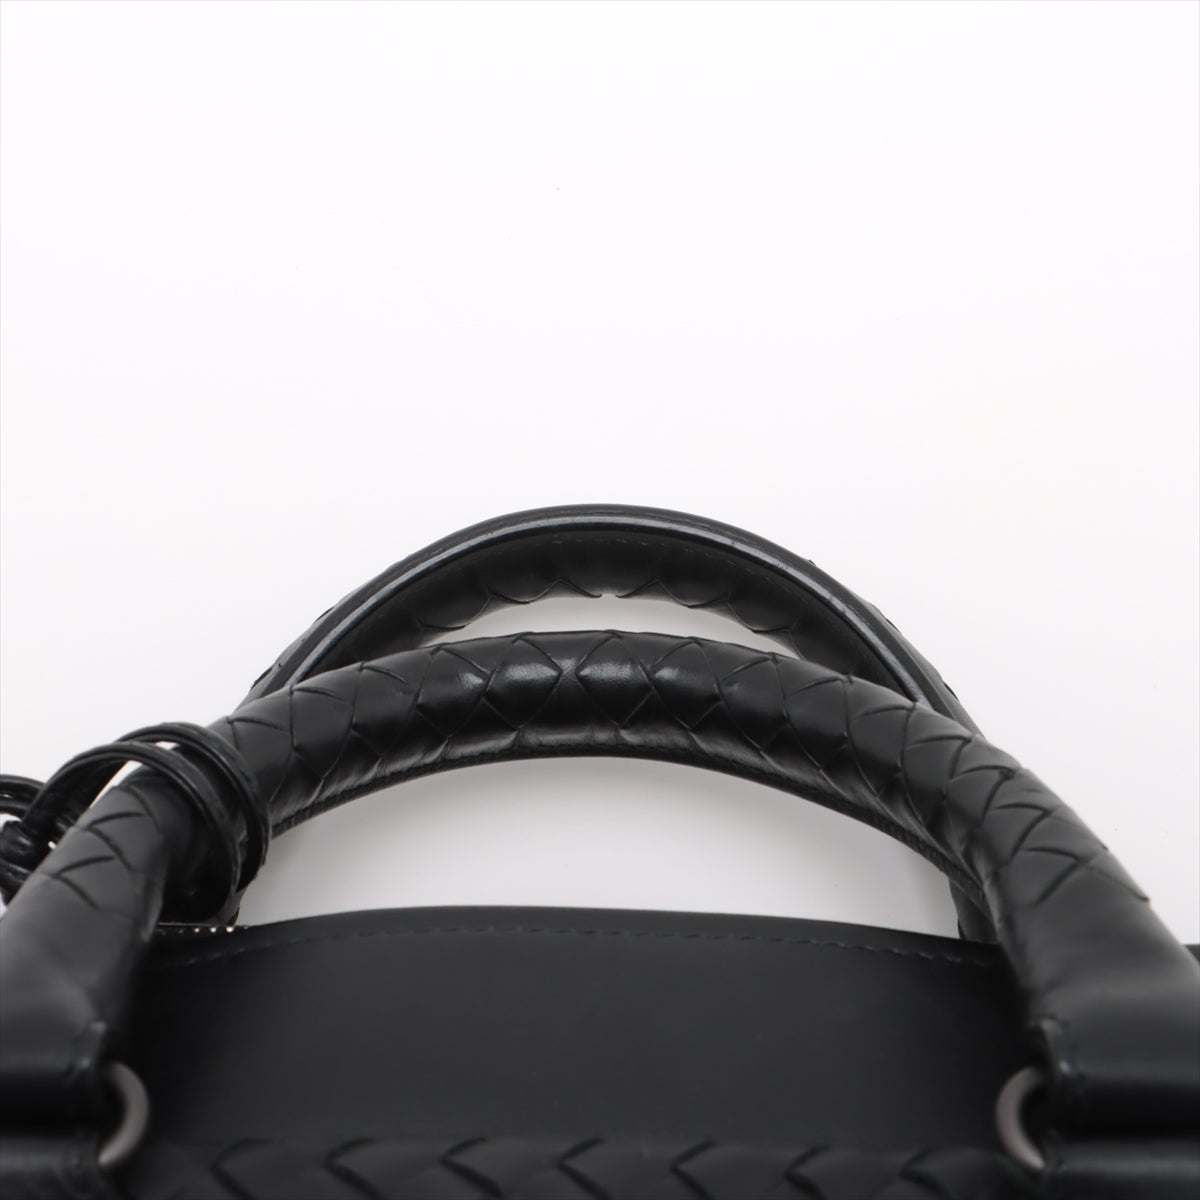 Bottega Veneta Intercharted Leather Business Bag Black